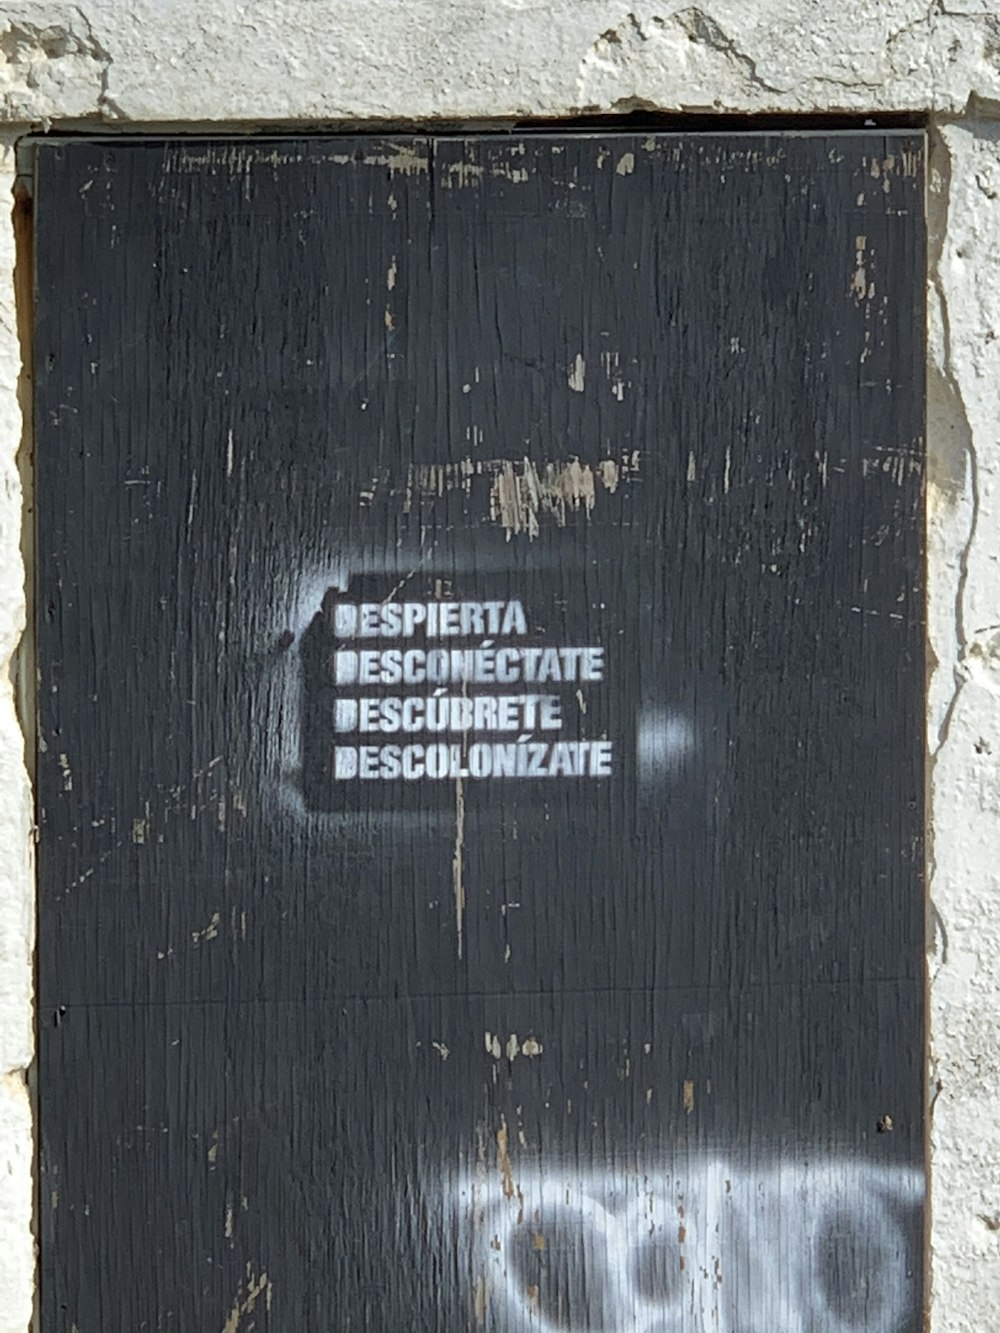 black wooden door with white text